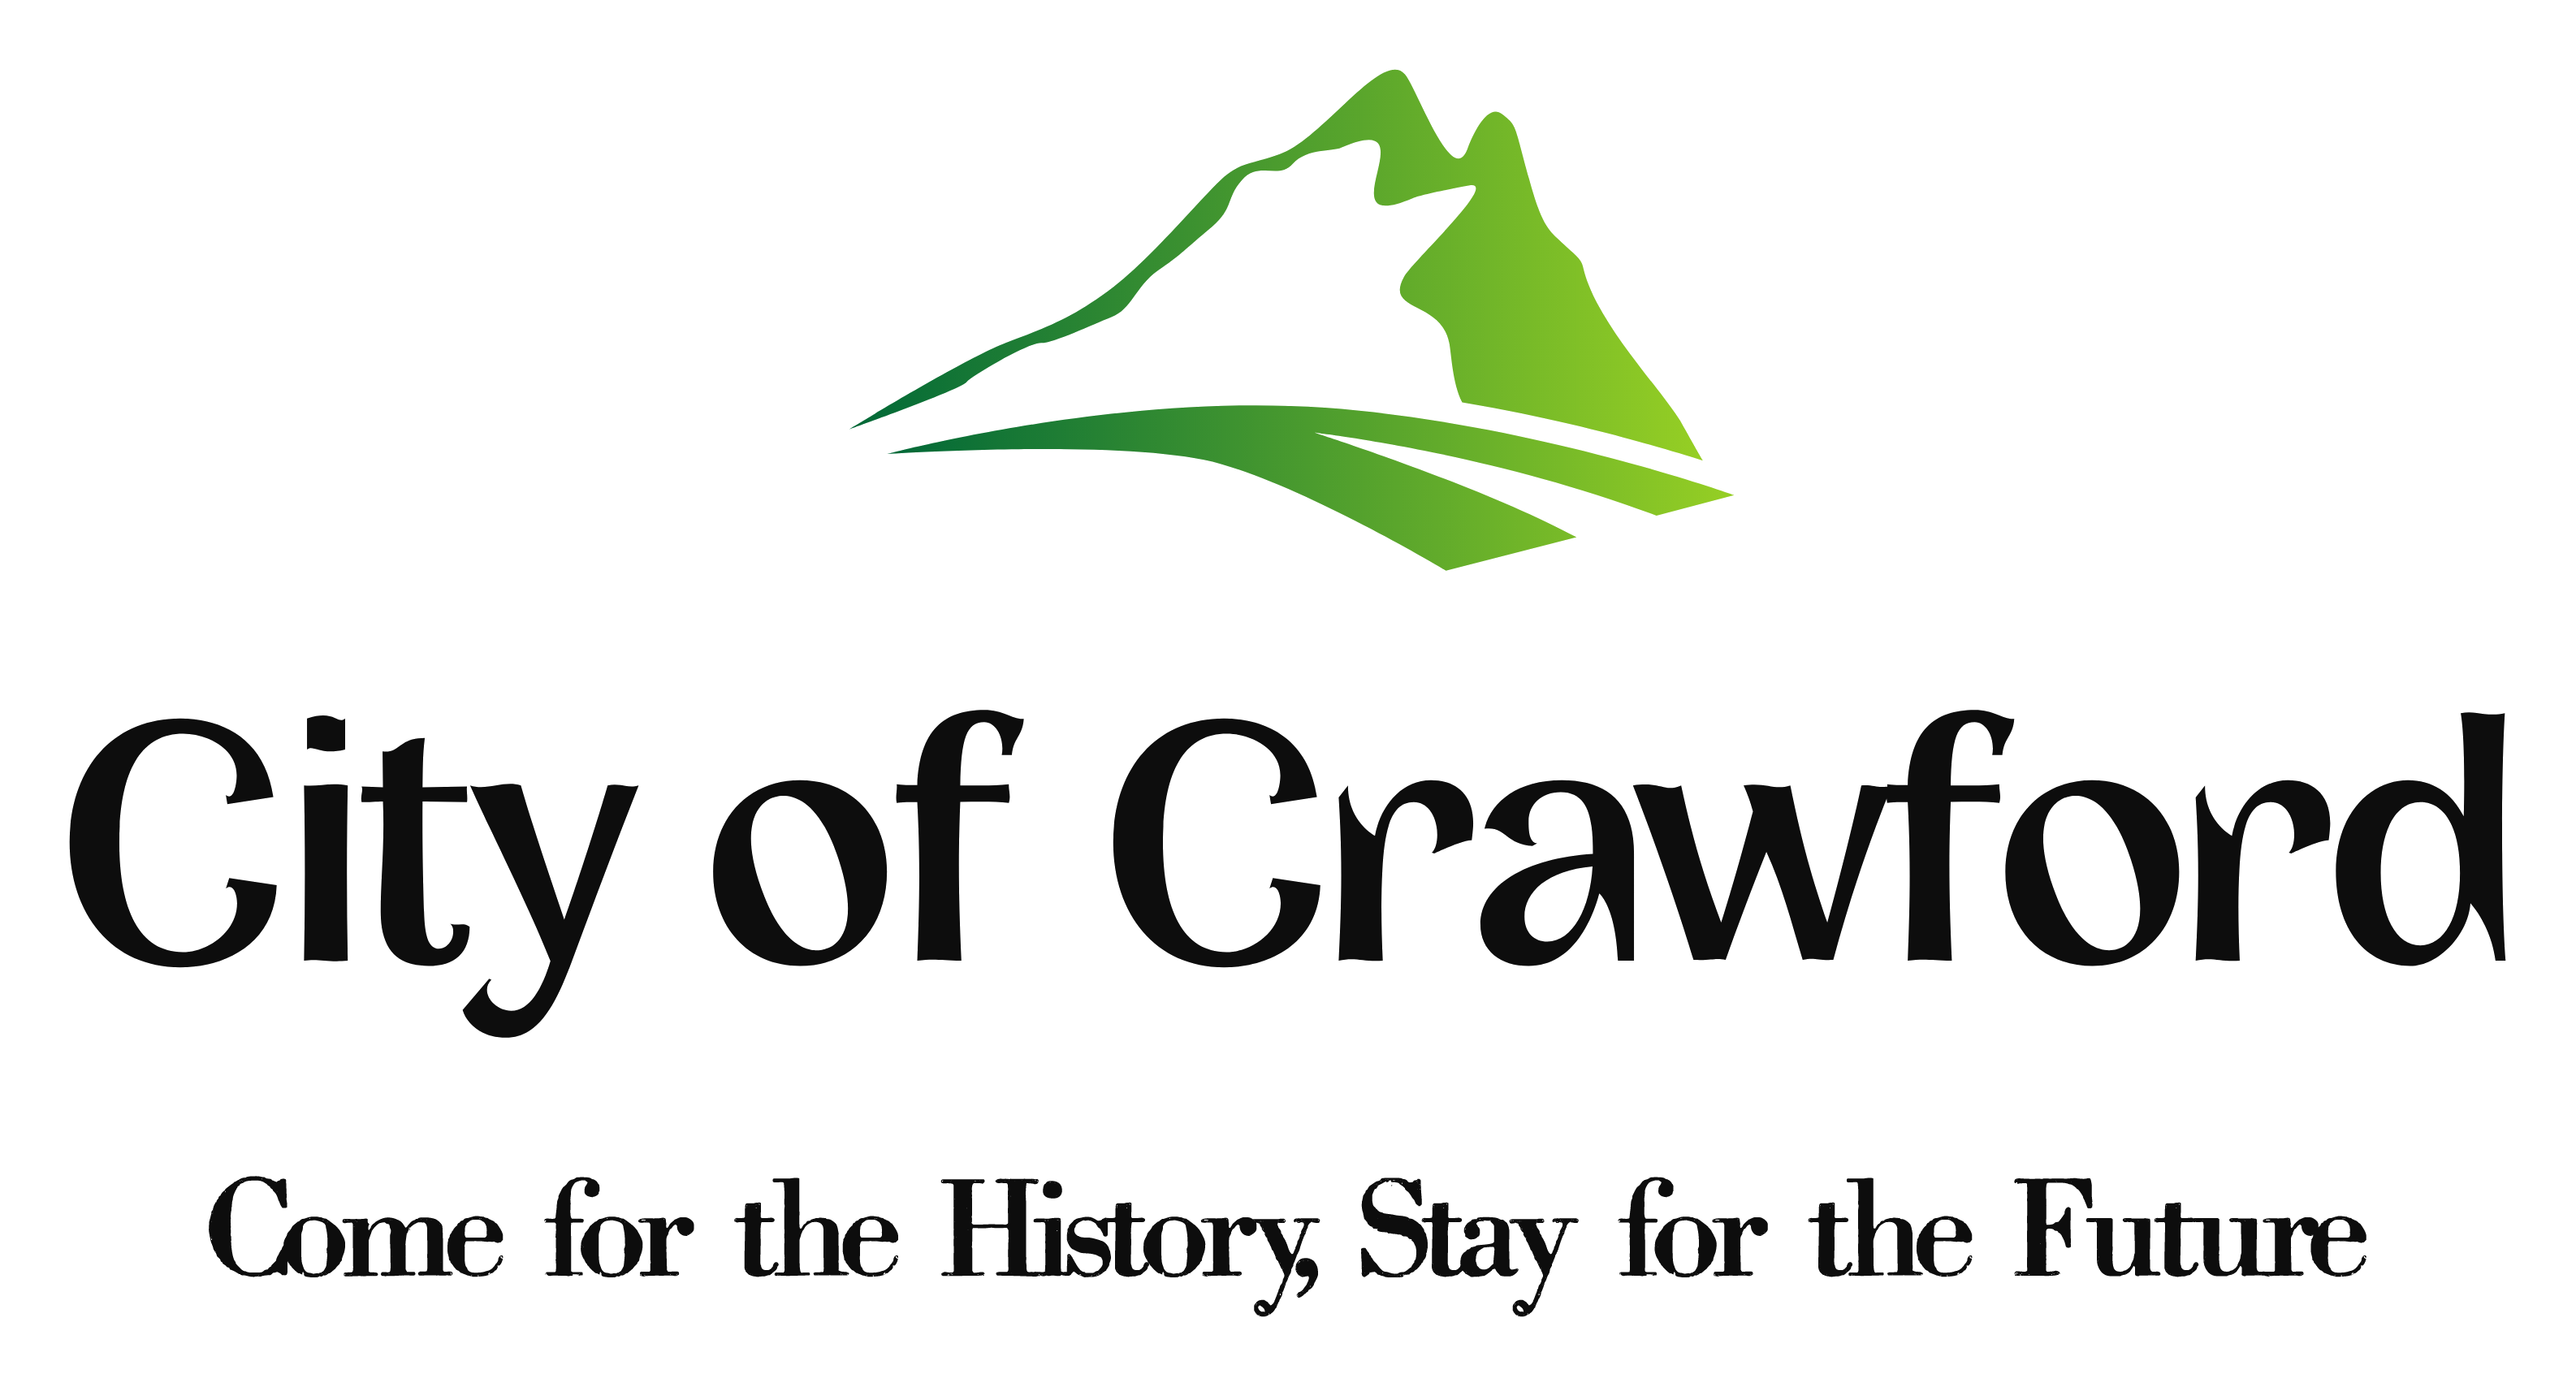 City of Crawford, NE Logo